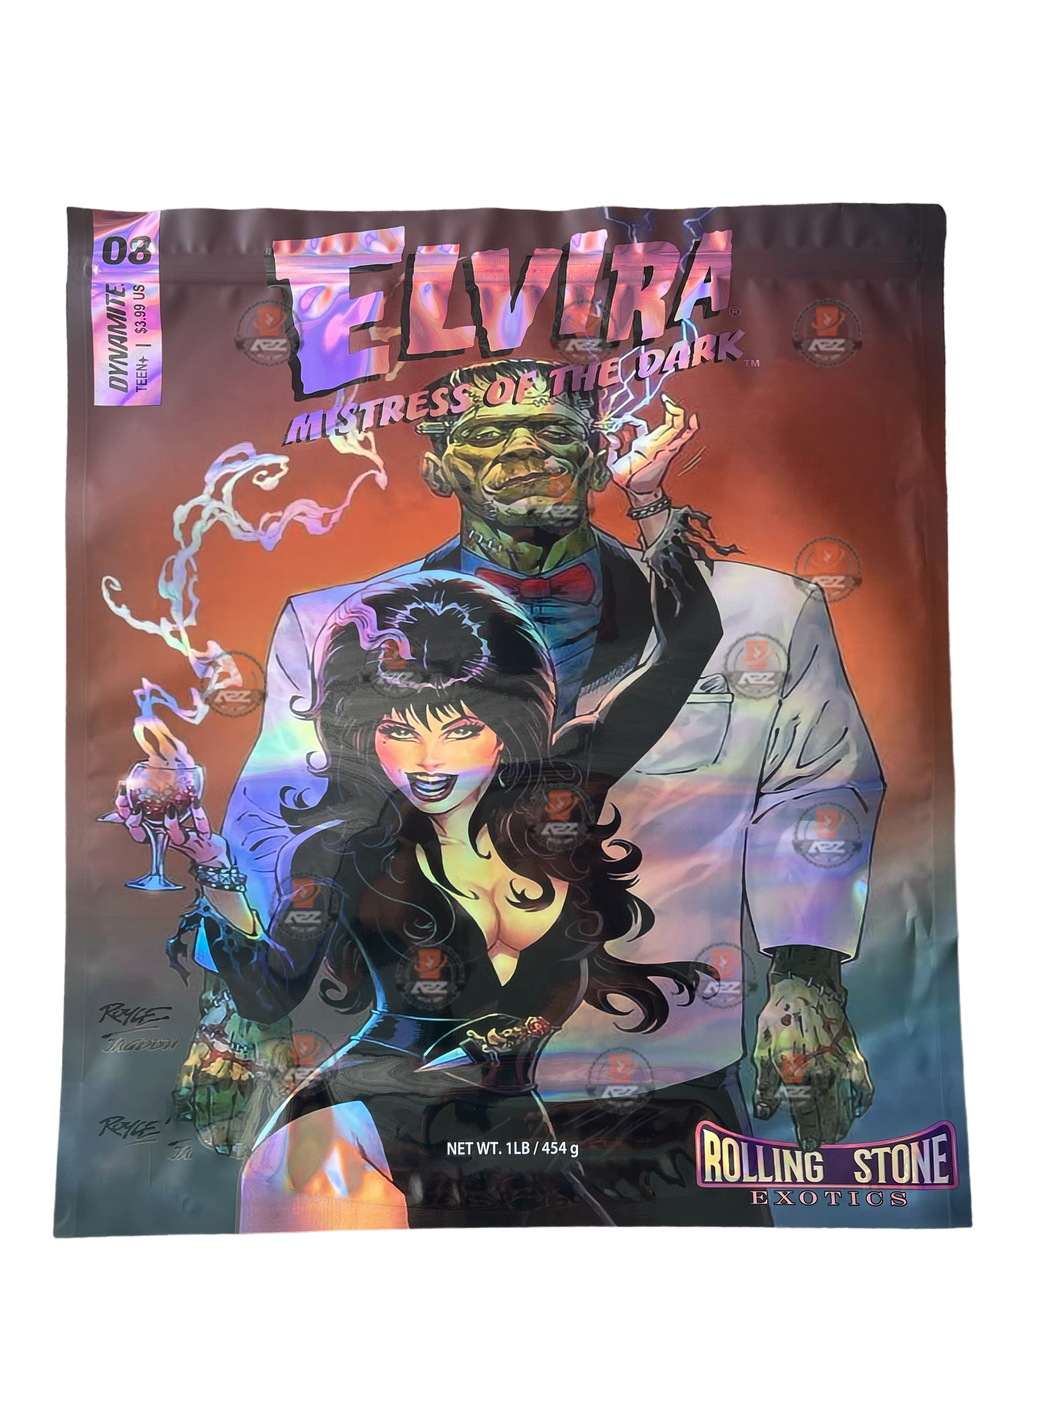 Elvira Mylar Bag (Large) 1 LBS - 16OZ (454g) Pound Bag Rolling Stone